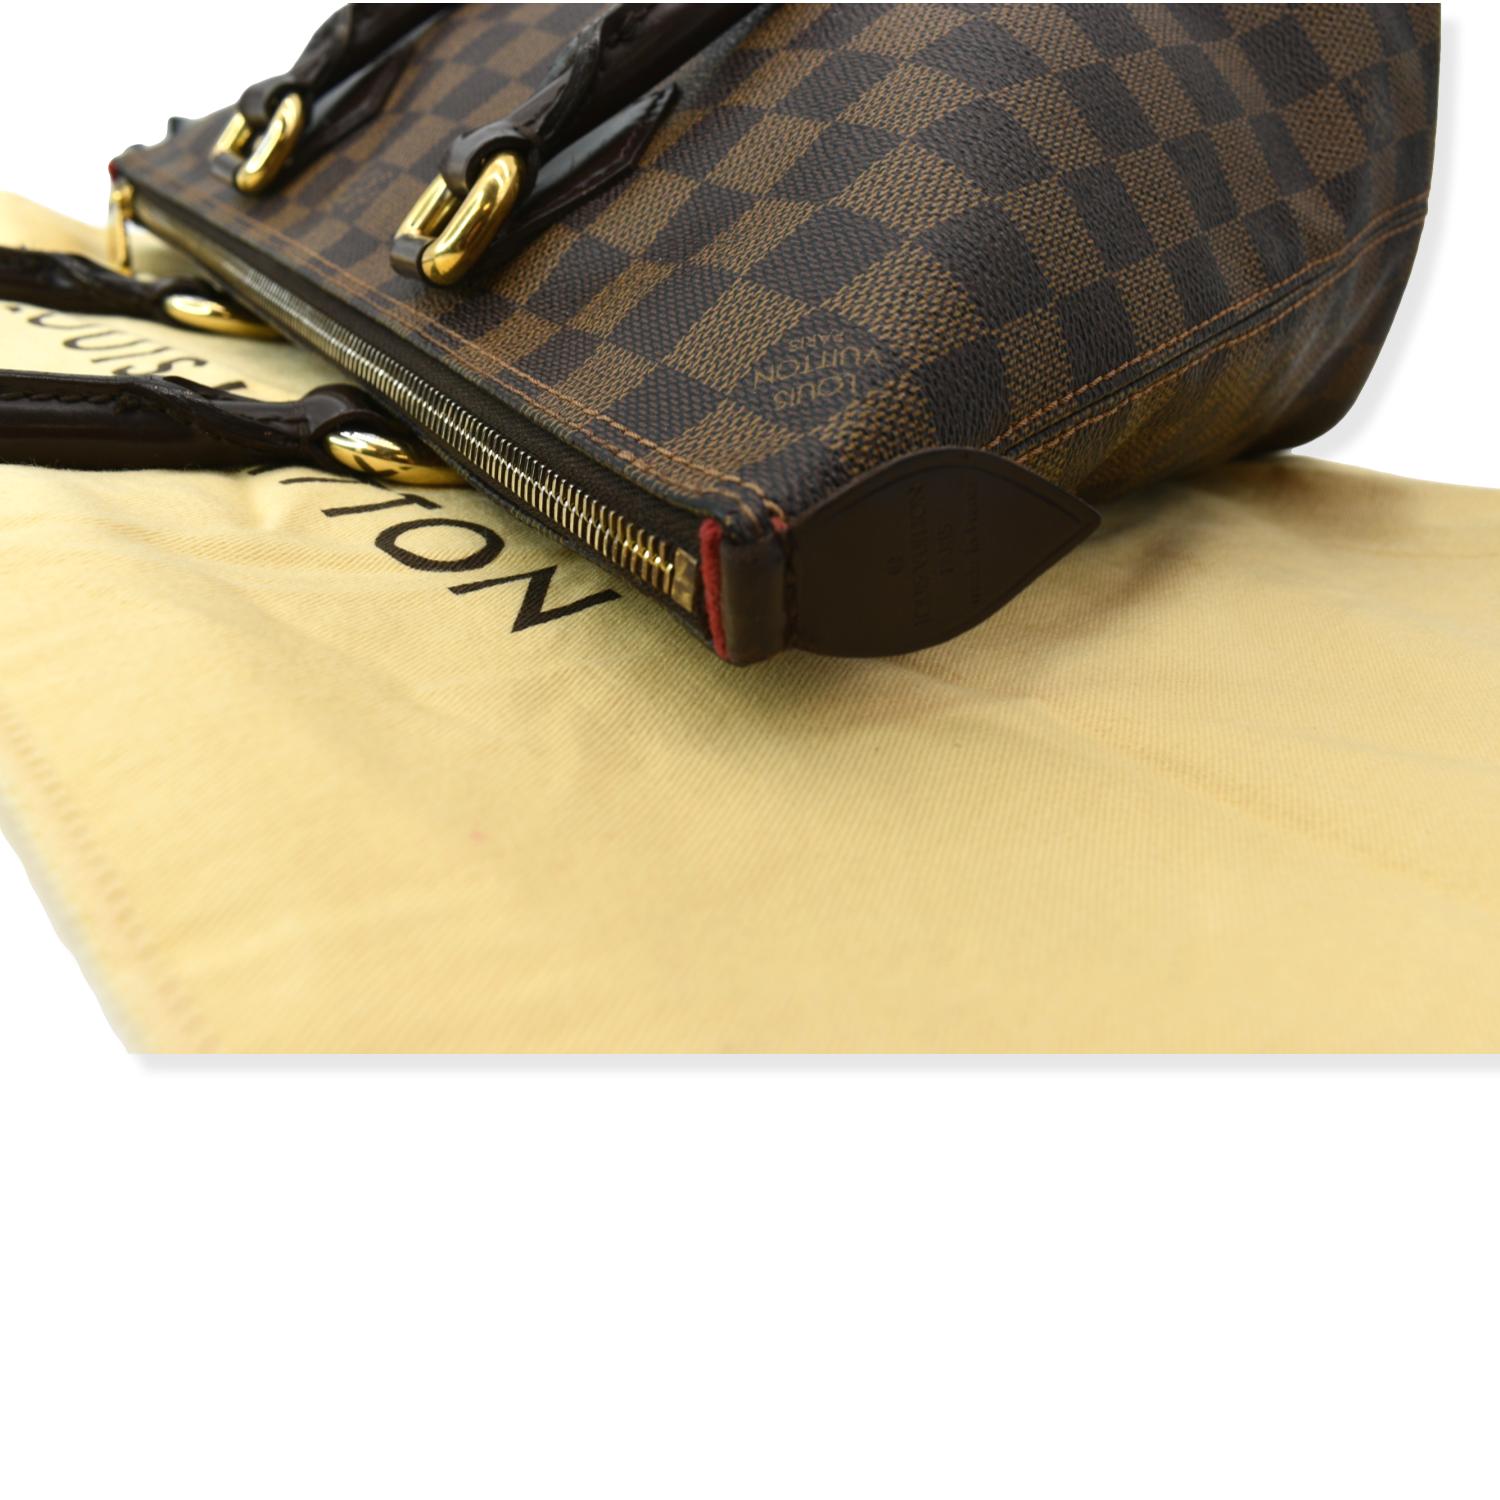 LOUIS VUITTON Saleya PM Shoulder Bag Damier Azur Leather White N51186  85BX144